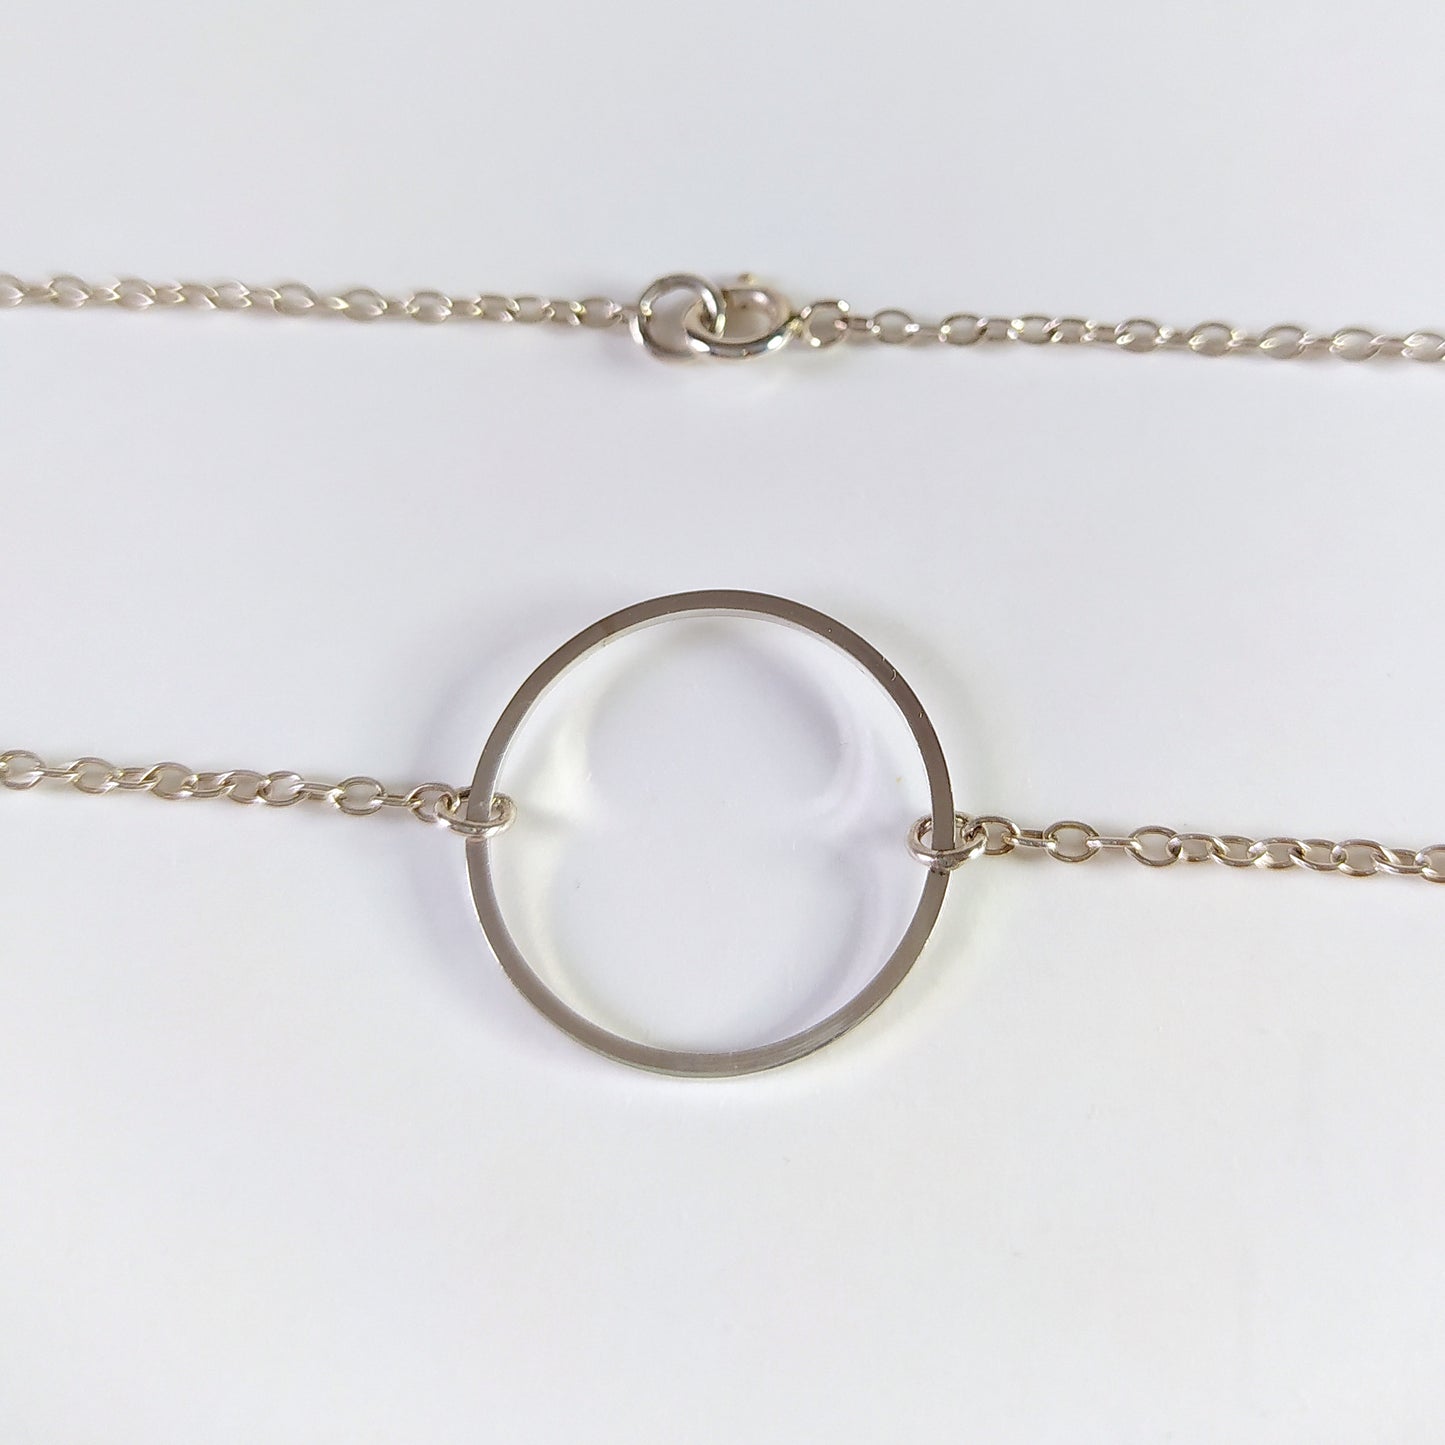 Runa | dainty silver chain with circle pendant